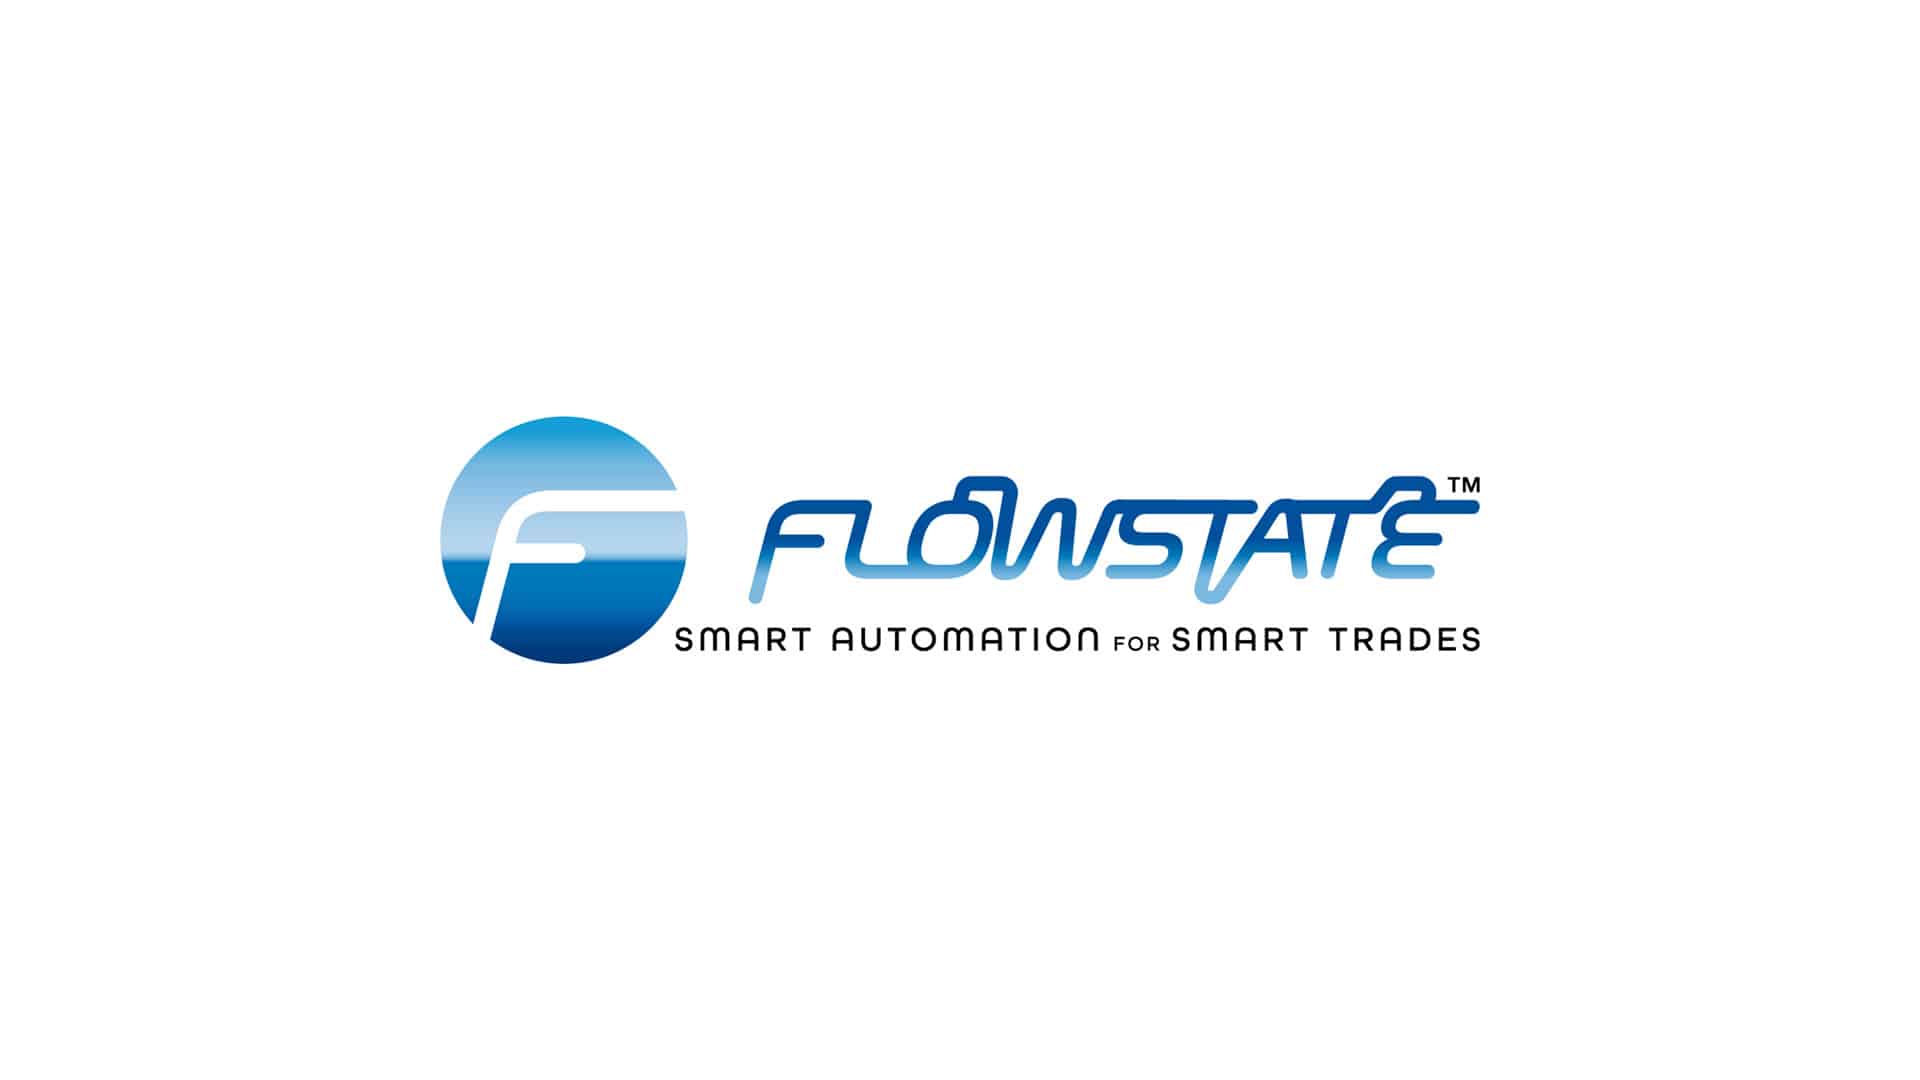 Flowstate landscape logo on white